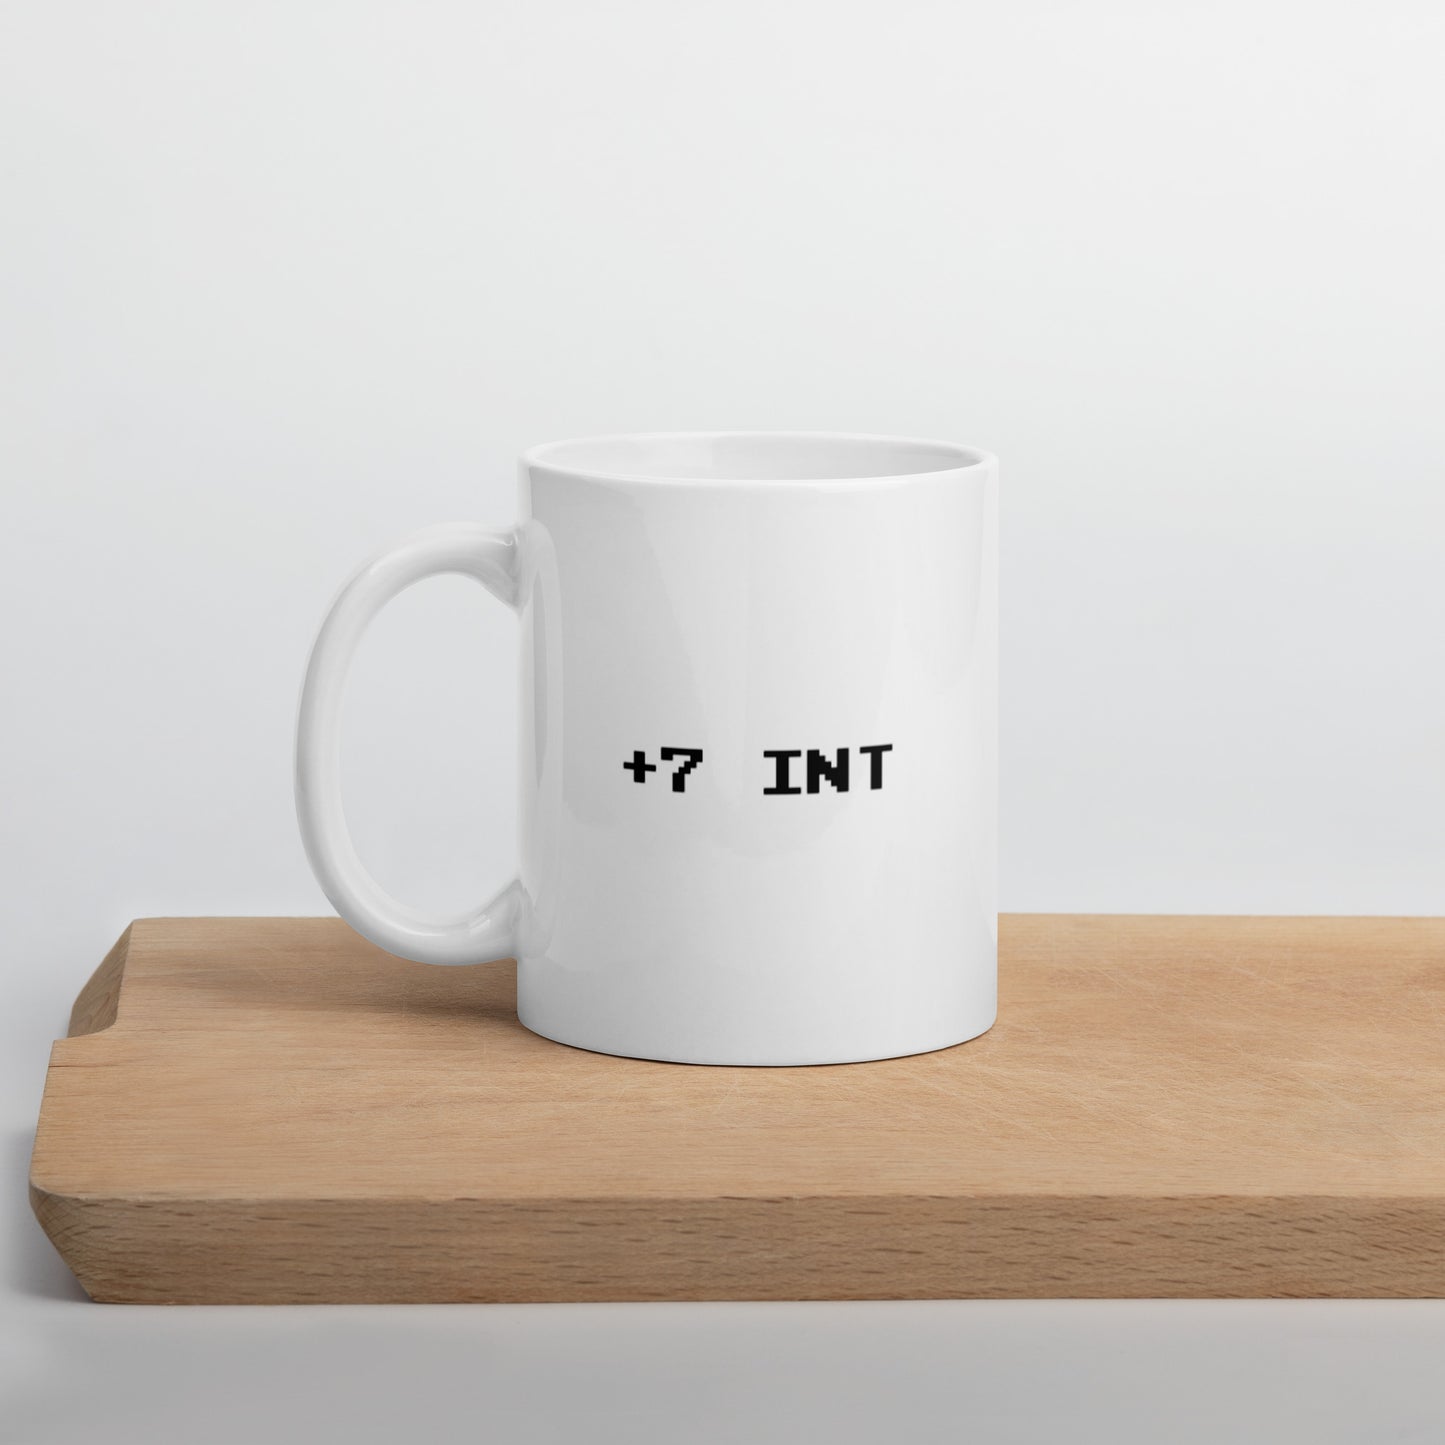 +7 INT - Mug